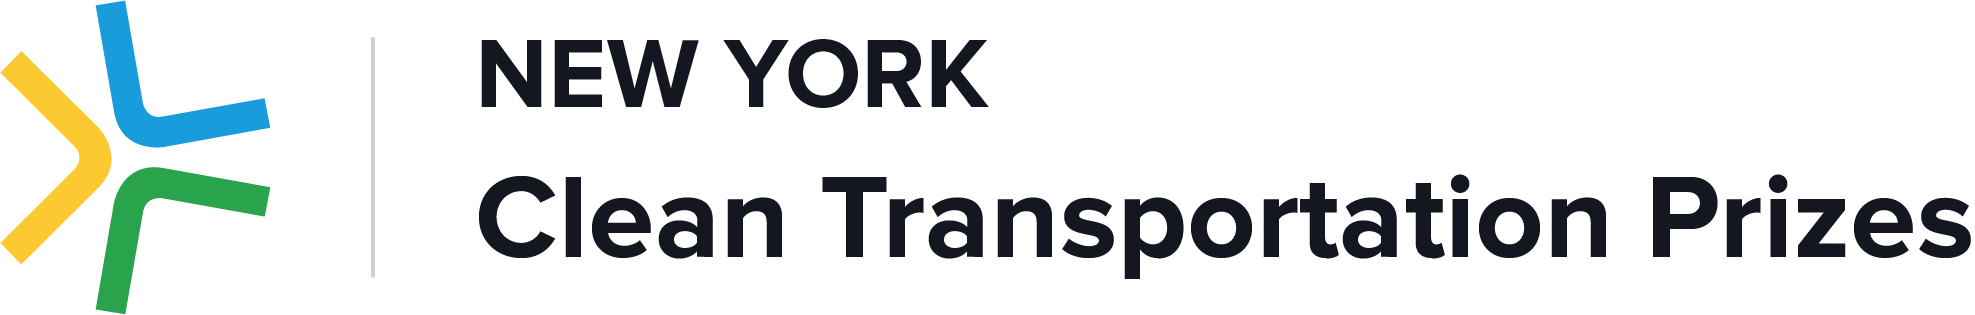 New York Clean Transportation Prizes